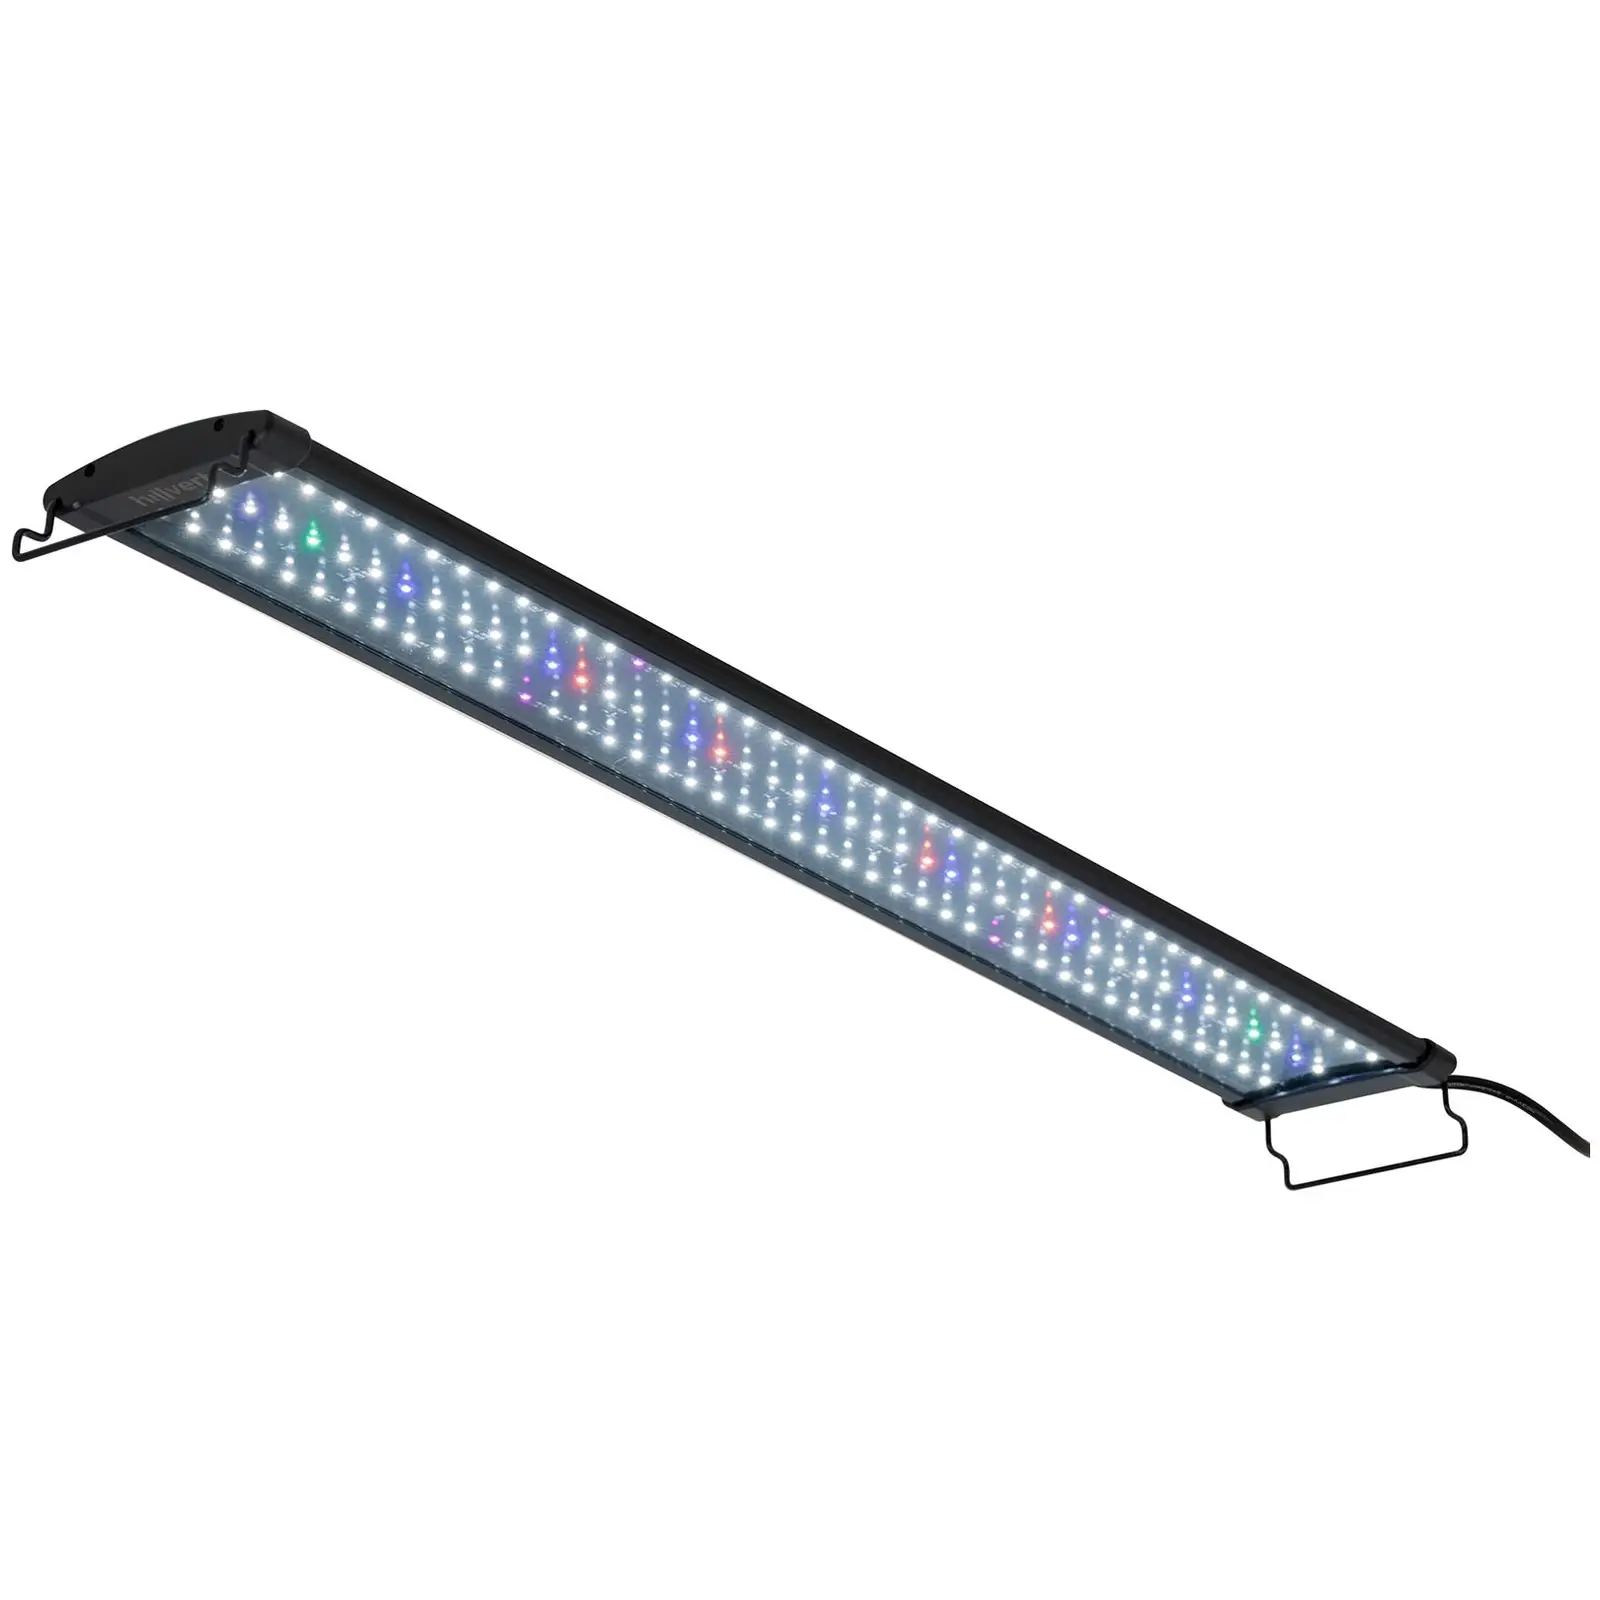  LED osvětlení akvária - 129 LED - 25 W - 87 cm